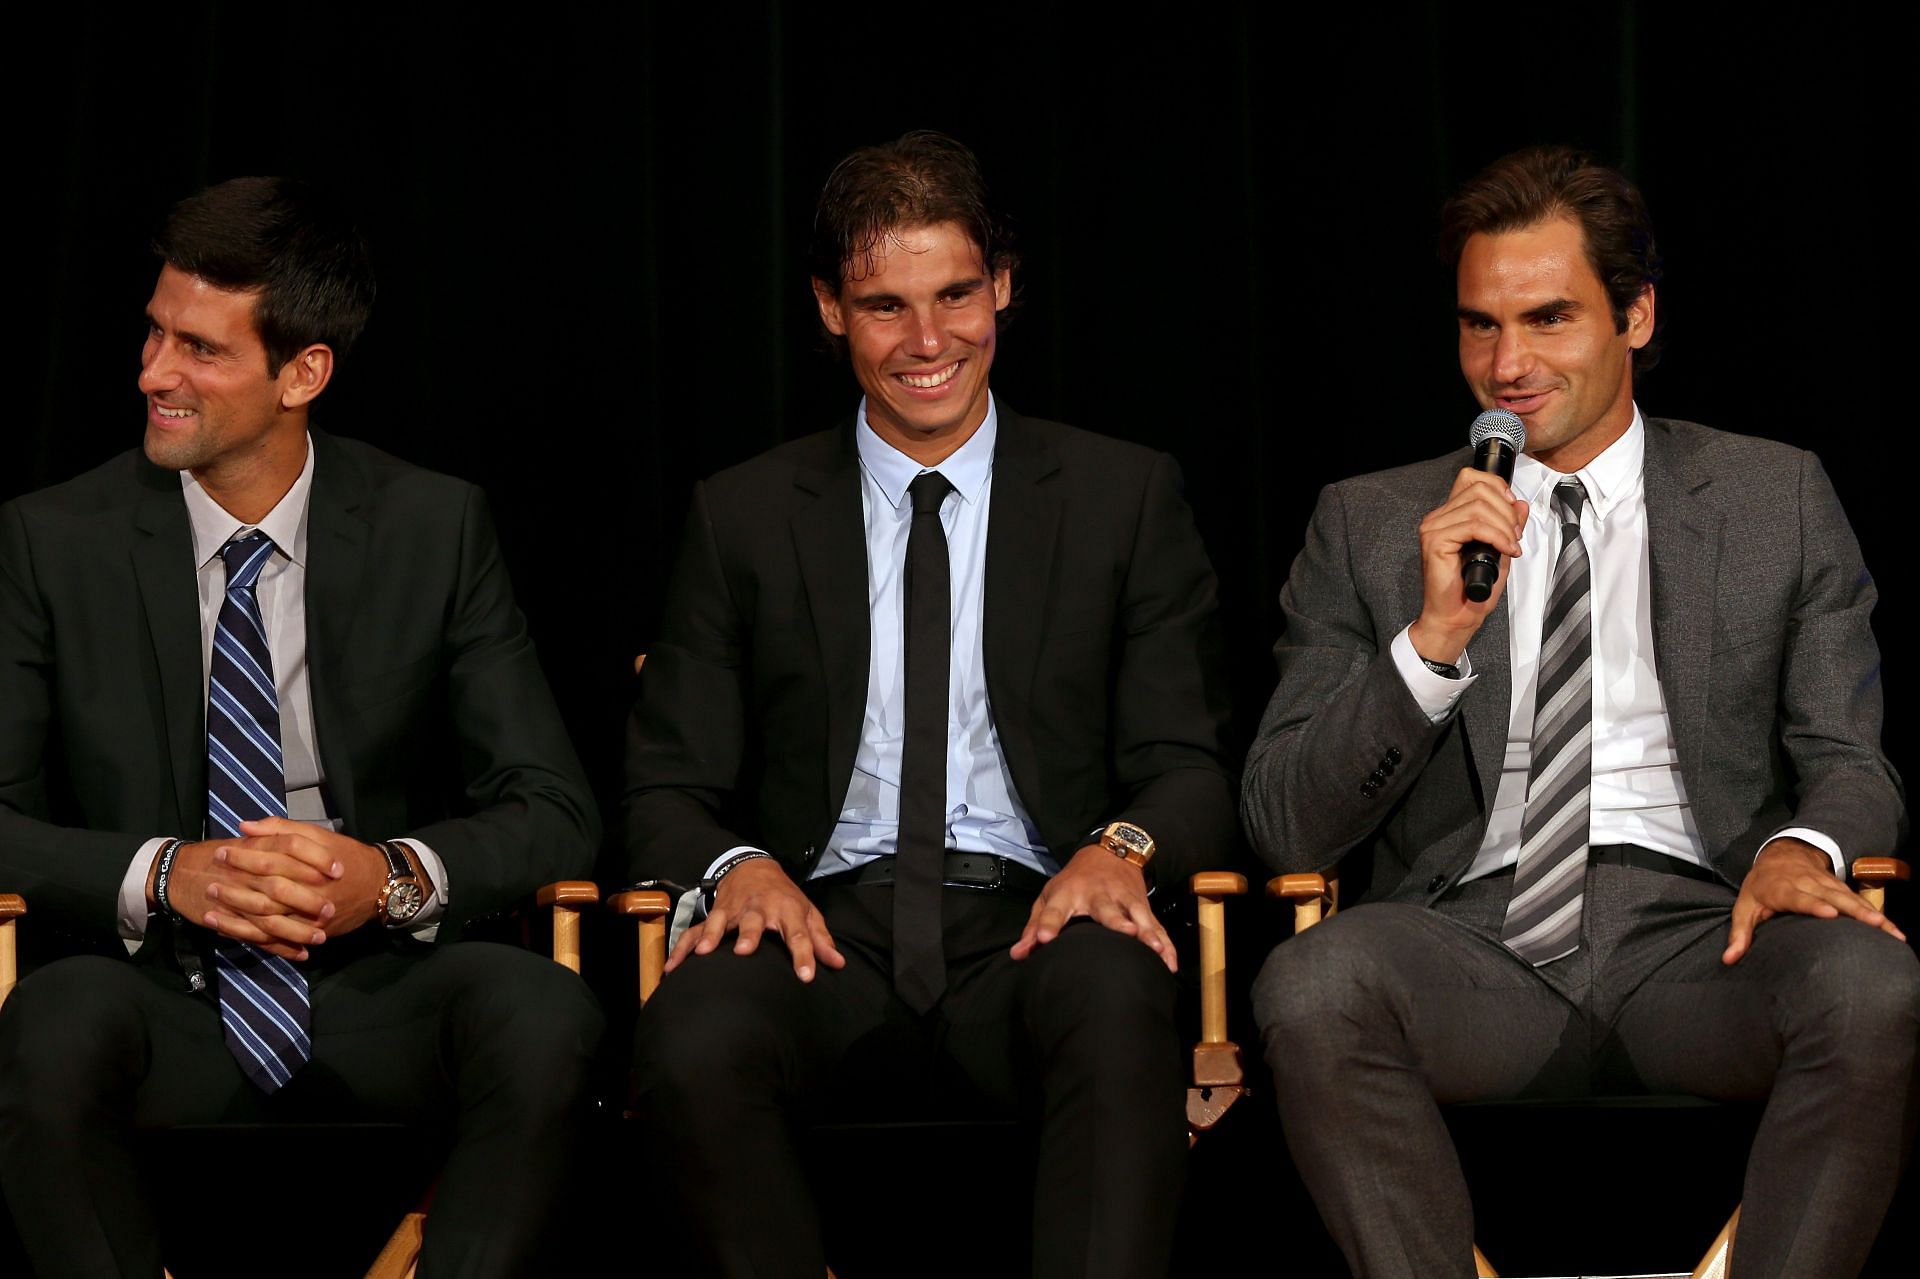 (L-R): Novak Djokovic, Rafael Nadal, and Roger Federer at an event